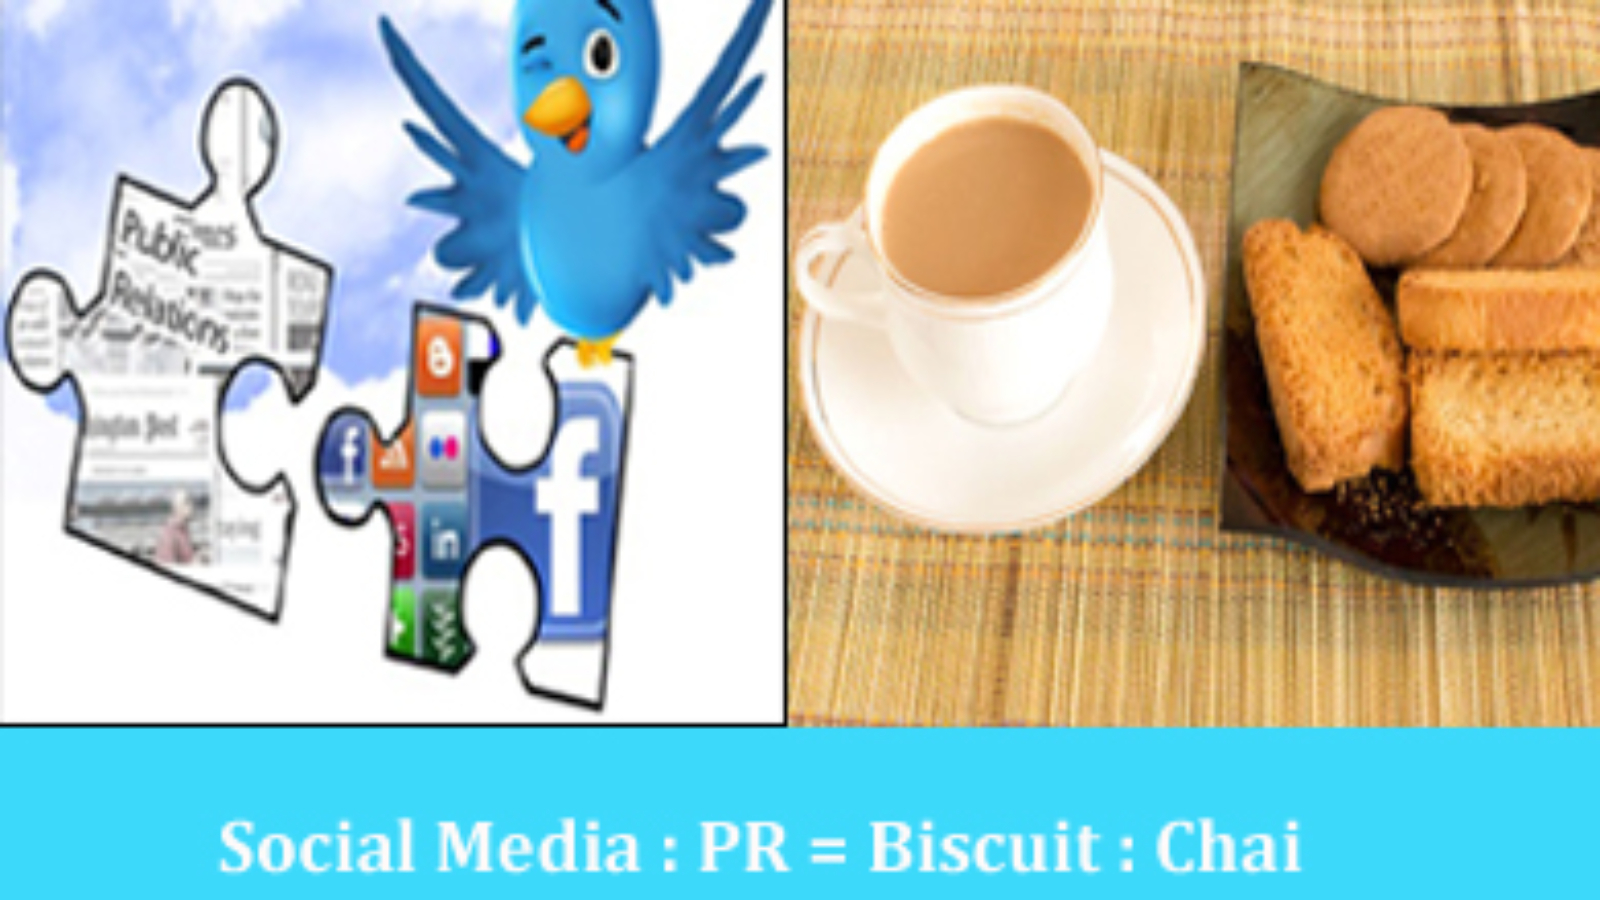 Social Media : PR = Biscuit : Chai